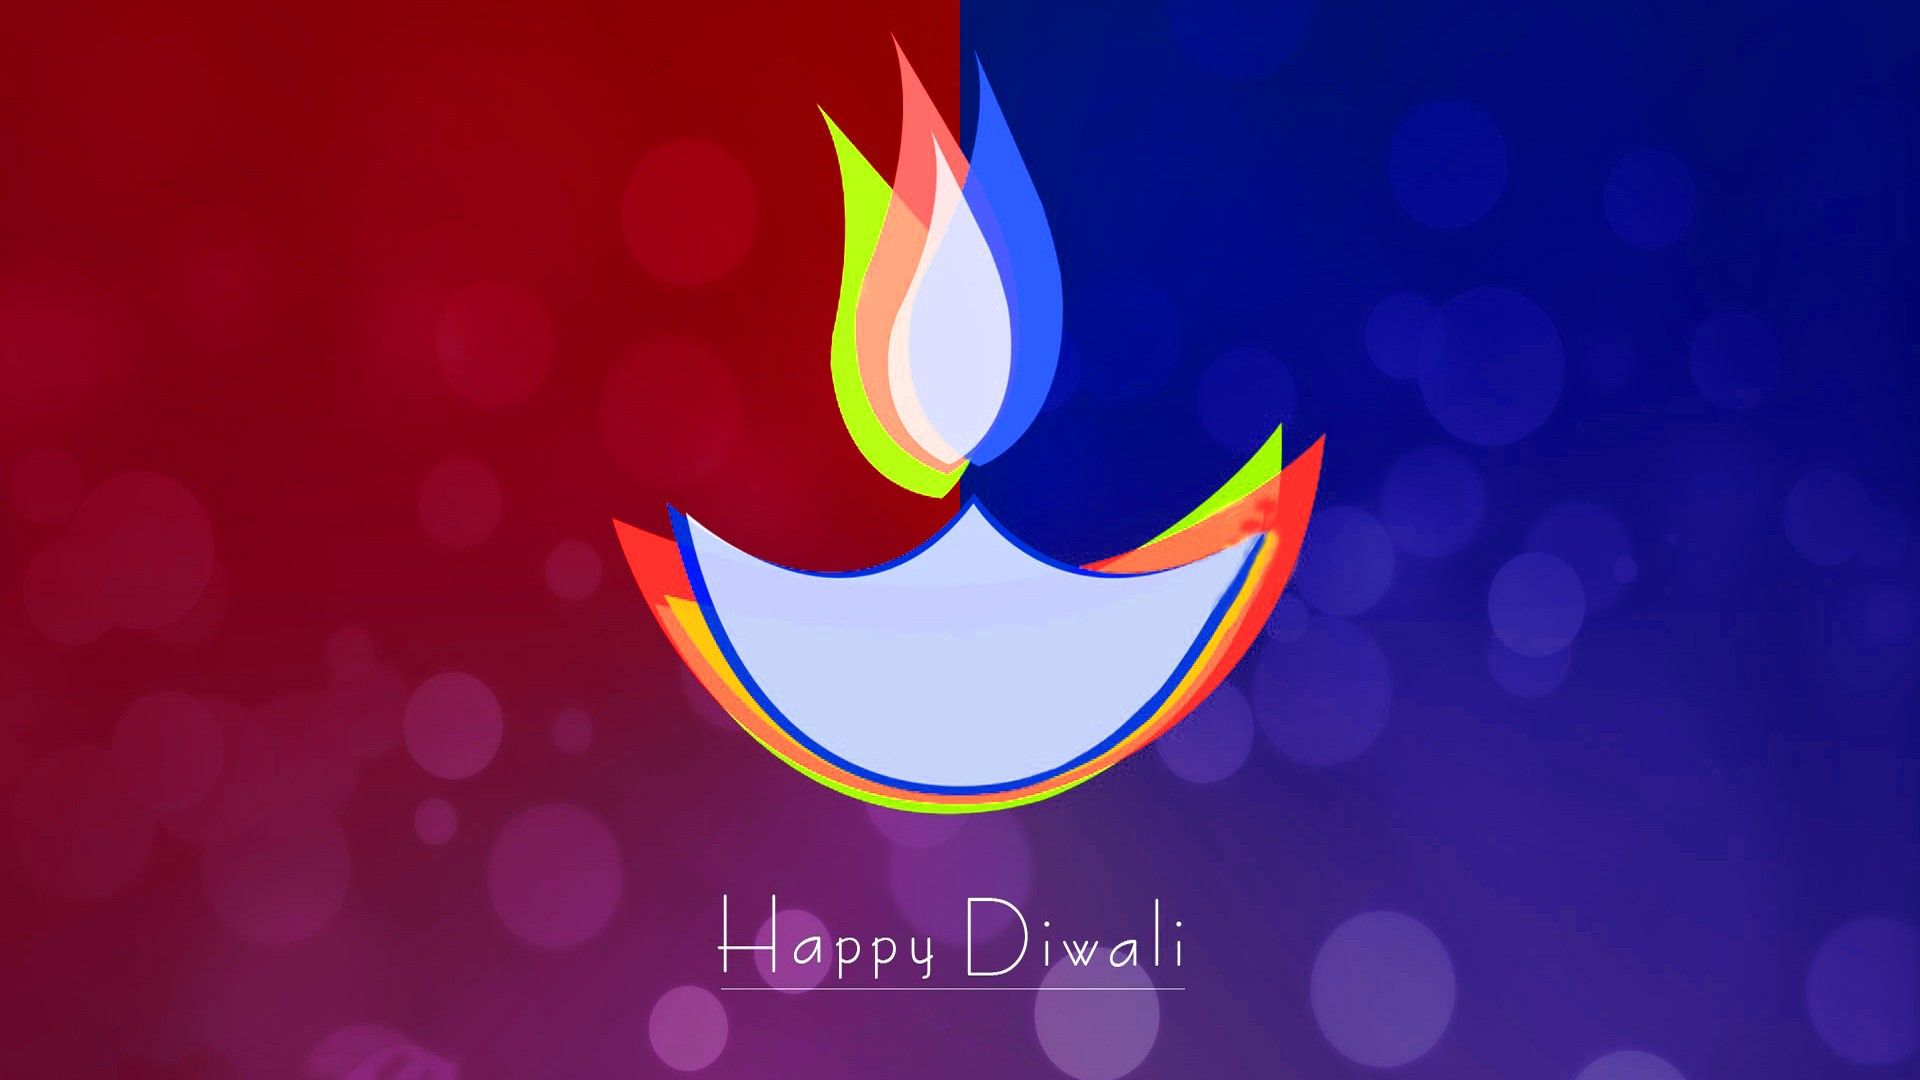 Diwali Greeting Card Hd Image